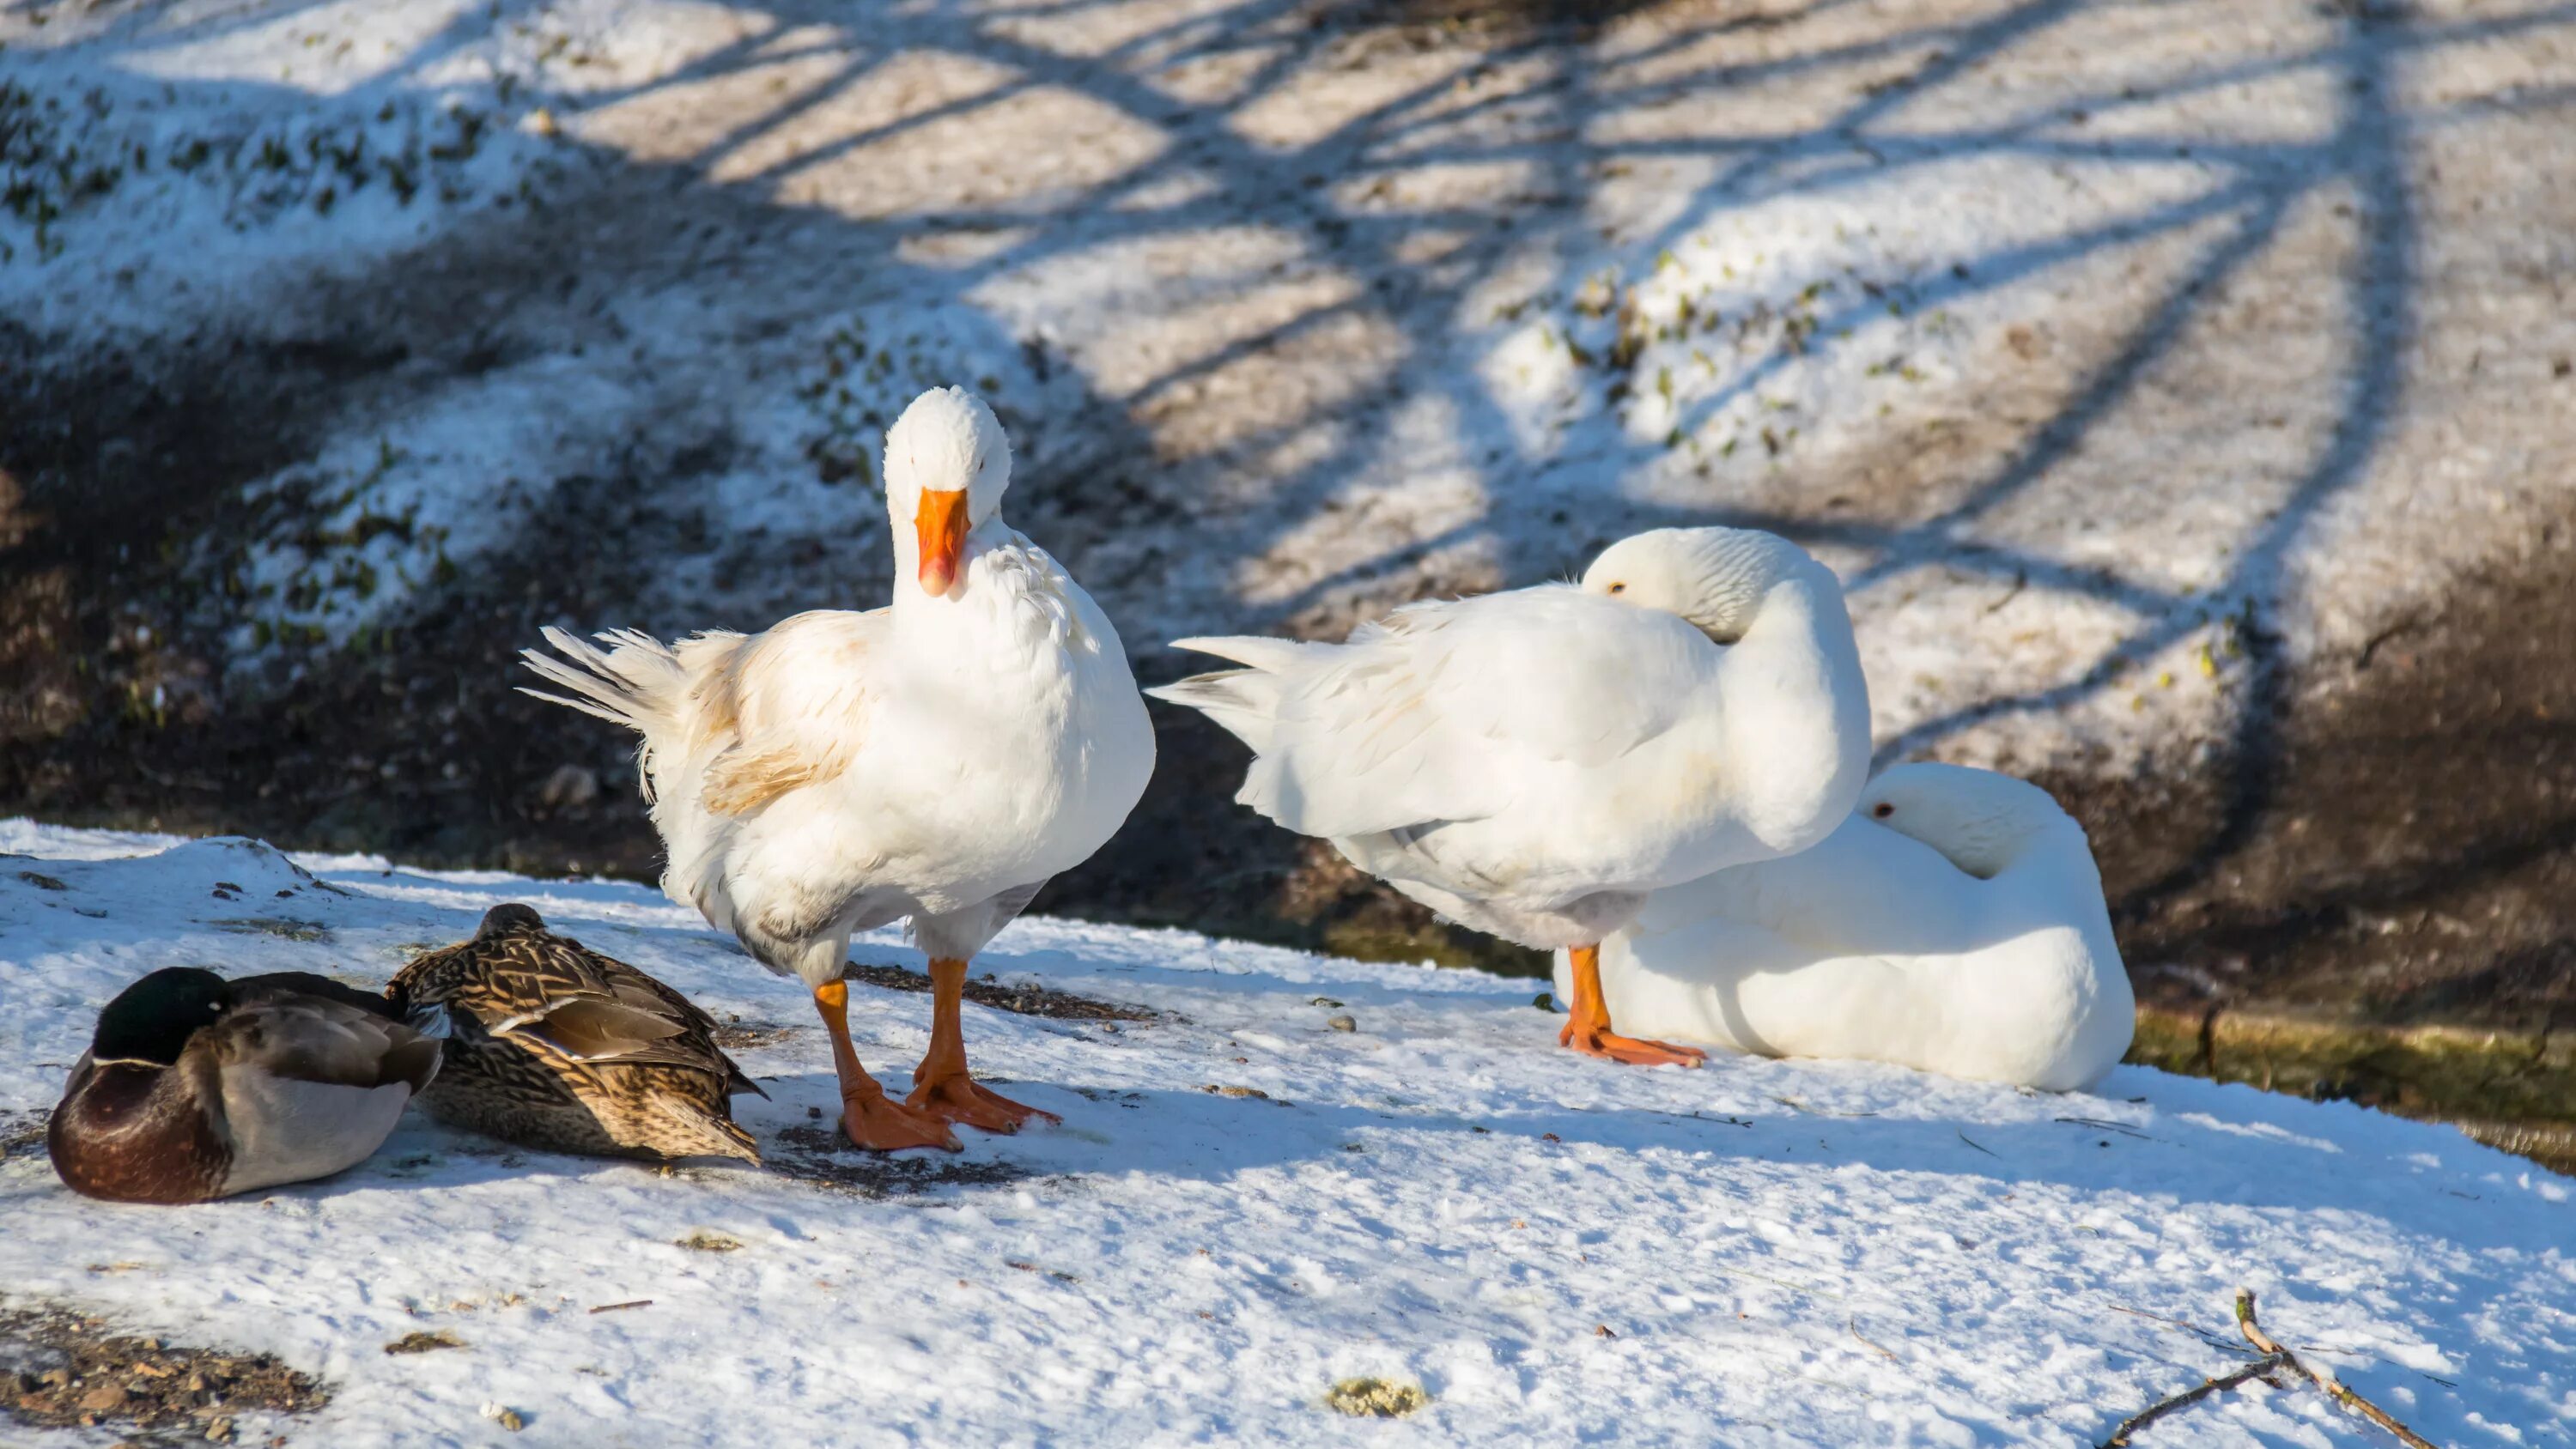 Get ducks. Гуси на снегу. Гуси зимой. Дикие гуси на снегу. Домашние утки зимой.